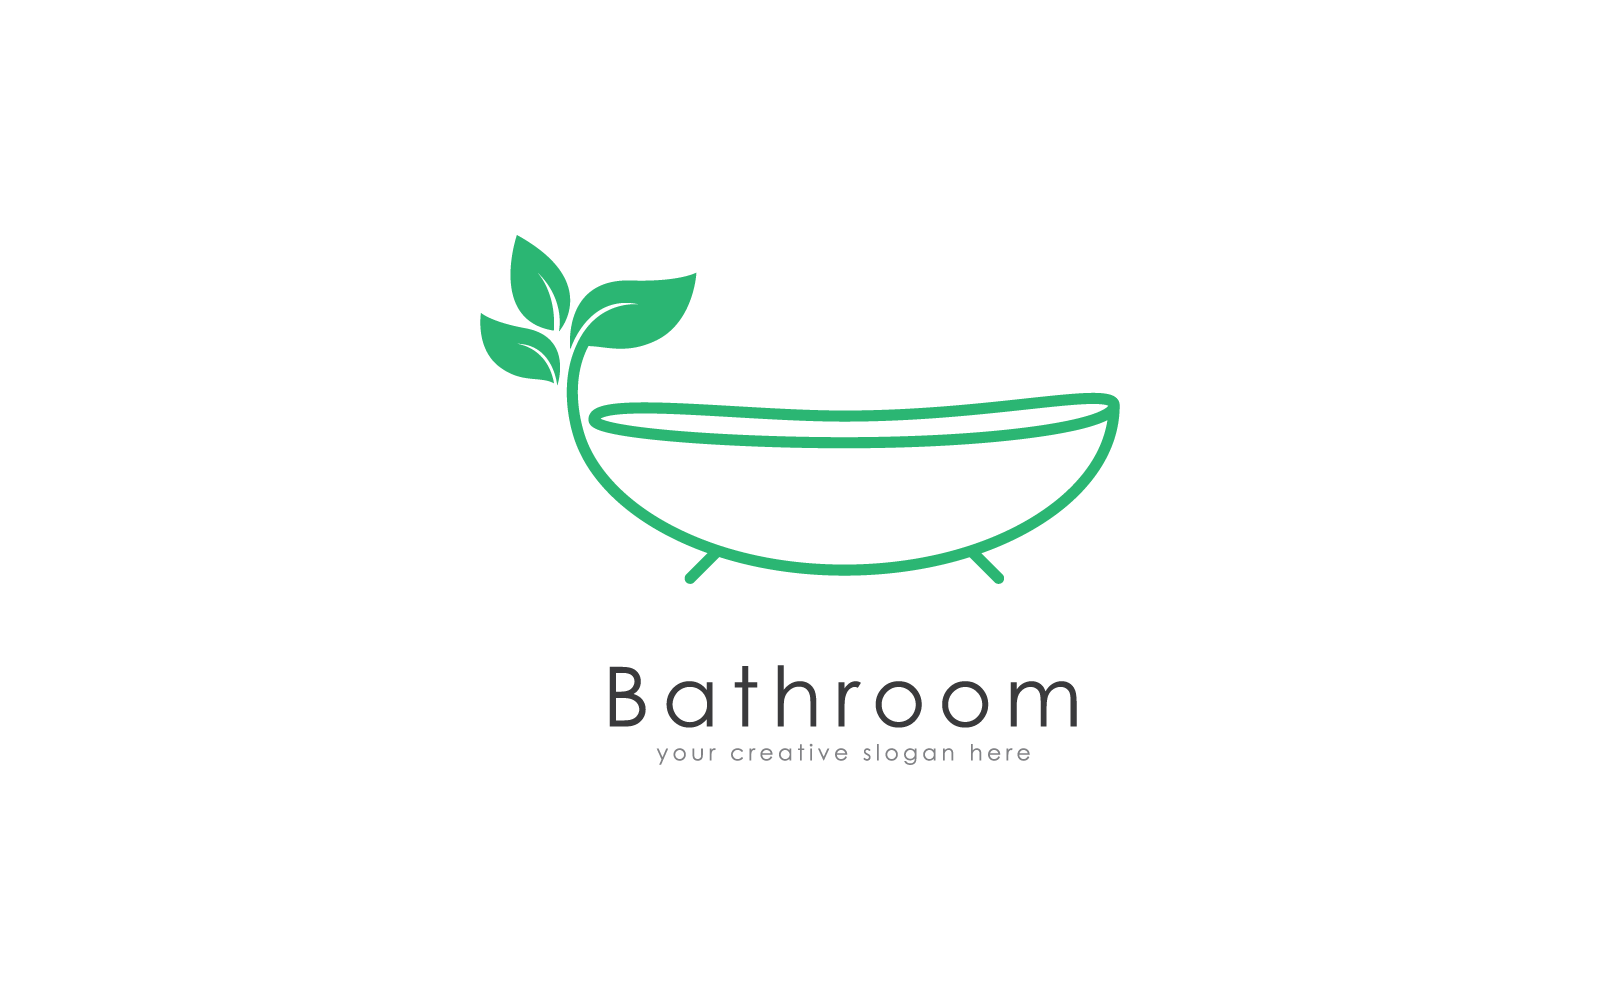 Bathtub Bathroom logo illustration icon vector flat design